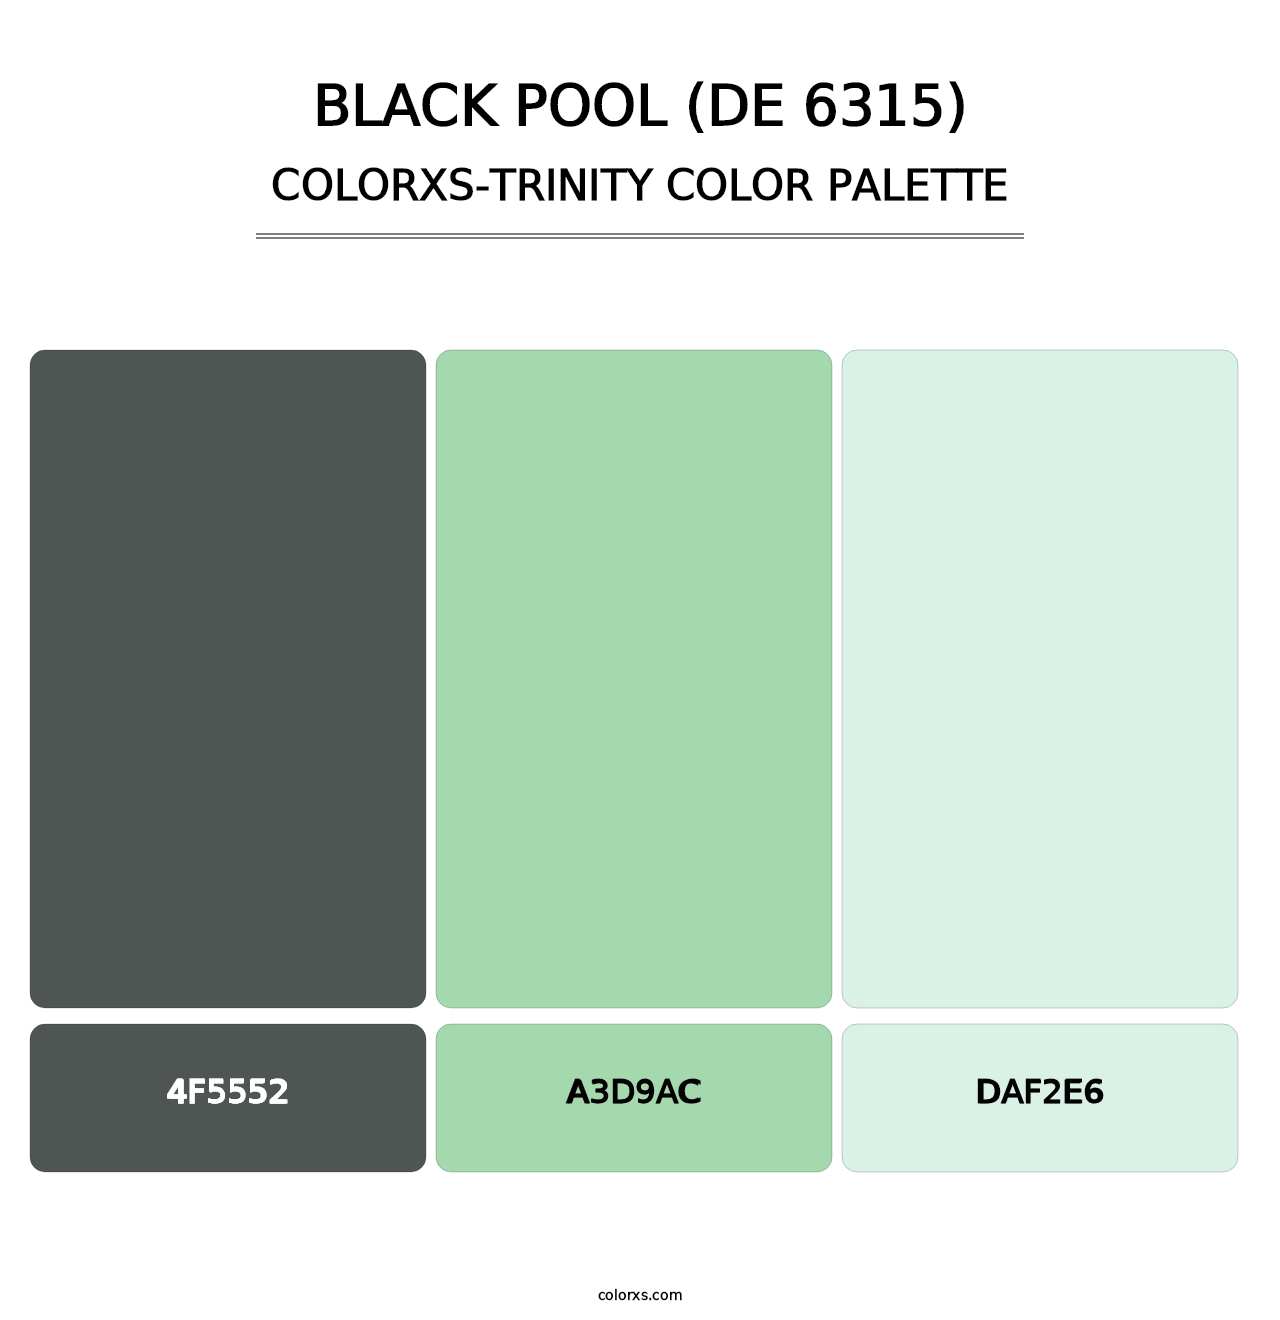 Black Pool (DE 6315) - Colorxs Trinity Palette